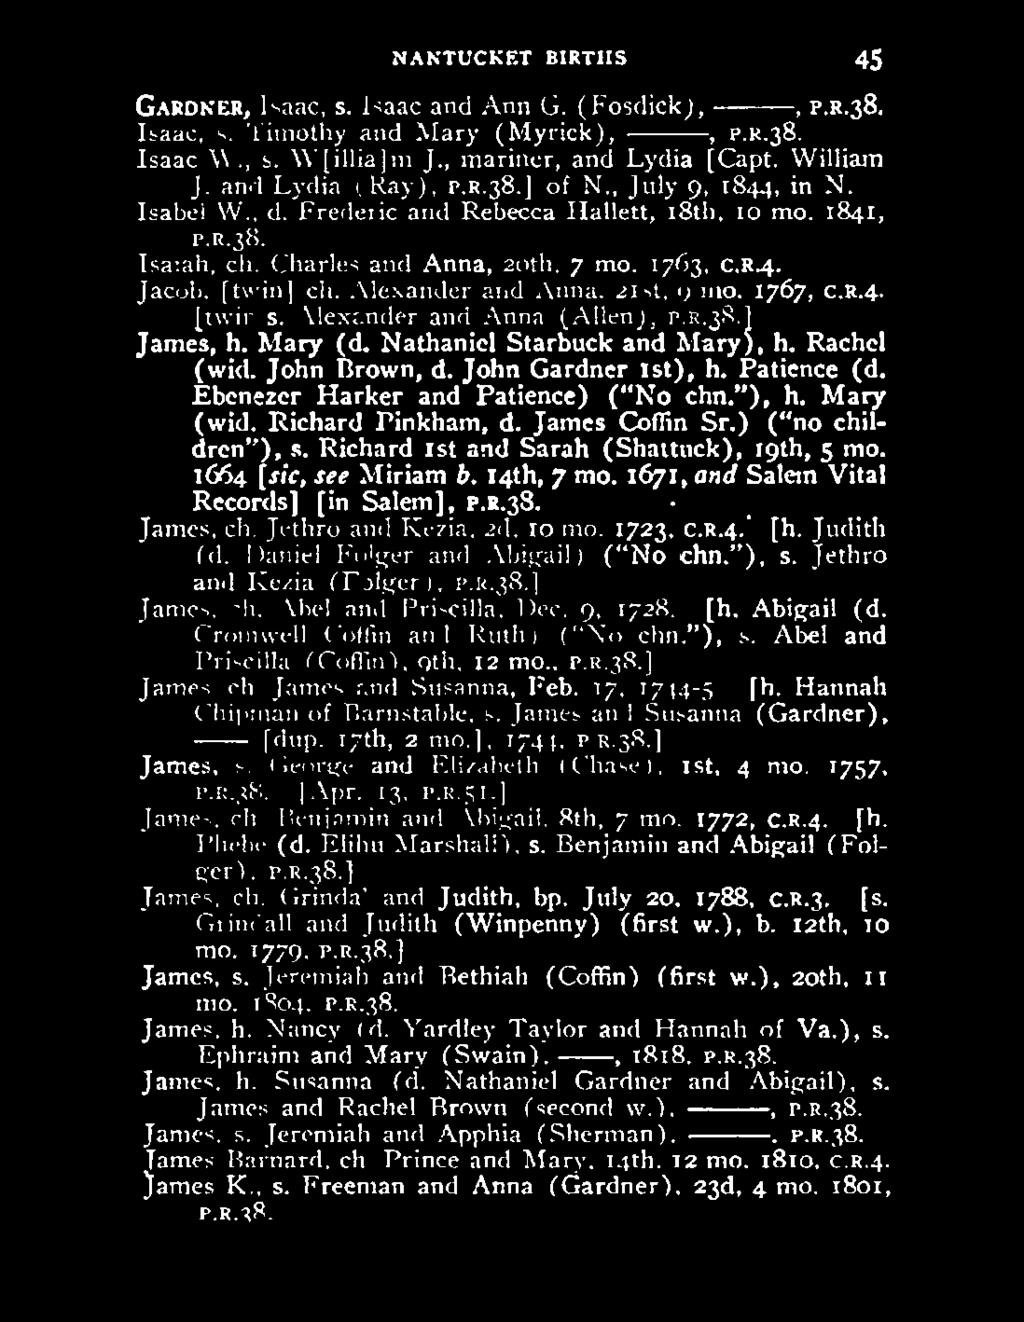 1664 [sic, ste l-liriam b. 14th, 7 mo. 1671. and Salem Vital Records 1 [in Salem], P.R.JS. James, ch. J ethro and Kezia, 2d, ro mo. 1723, c.r.4.' [h. Judith {d. Daniel F olger and Abigail ) ("No chn.